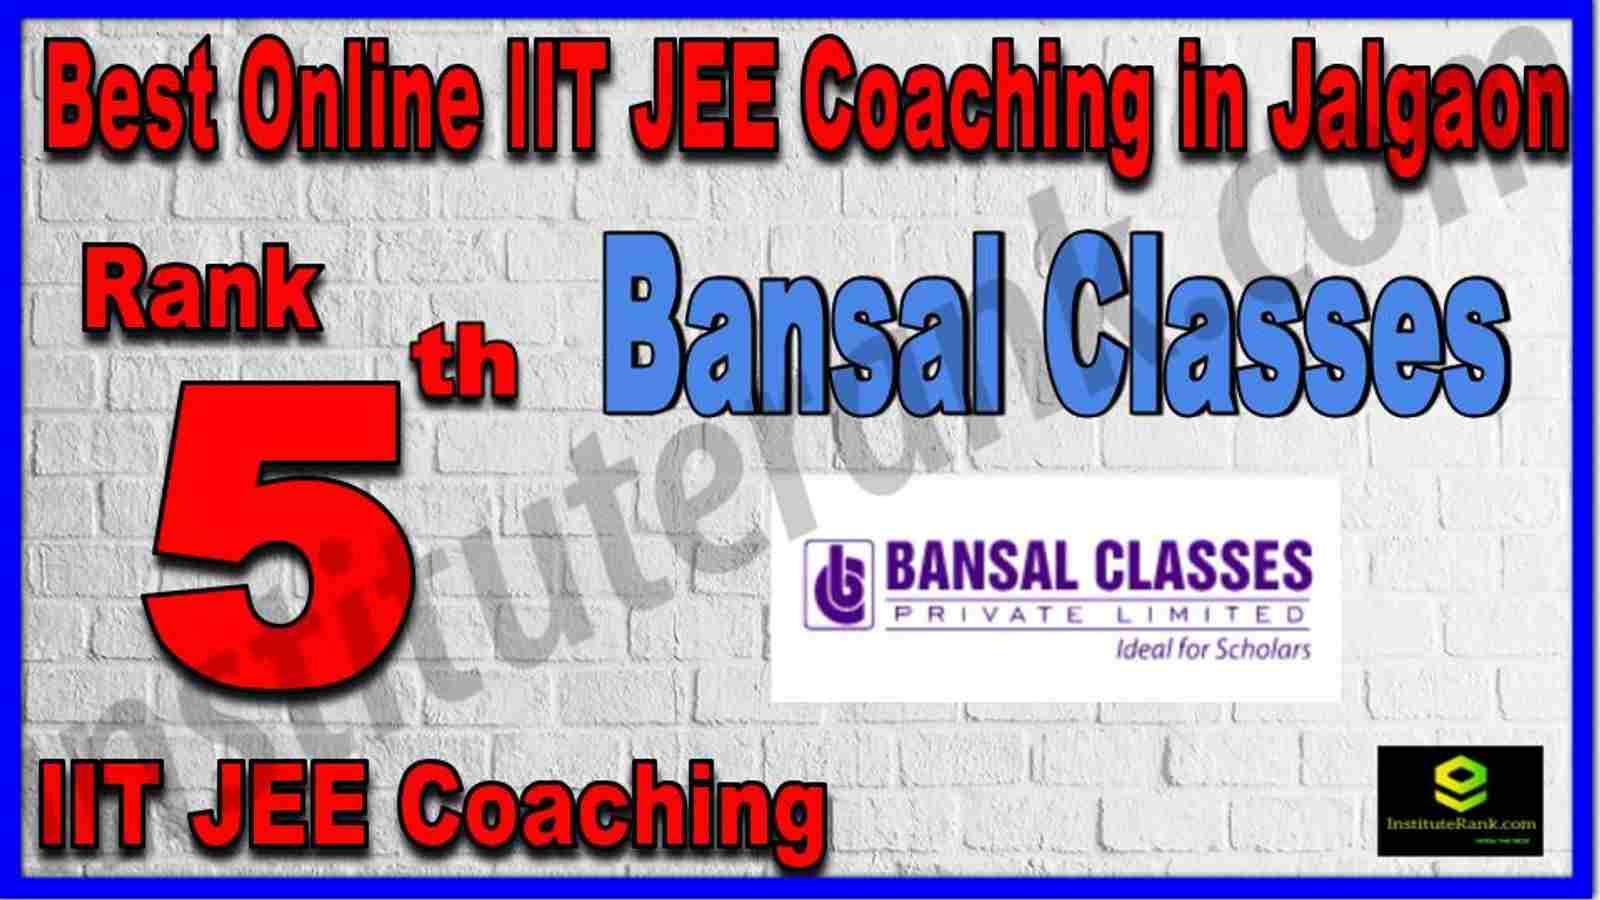 Rank 5th Best Online IIT JEE Coaching in Jalgaon